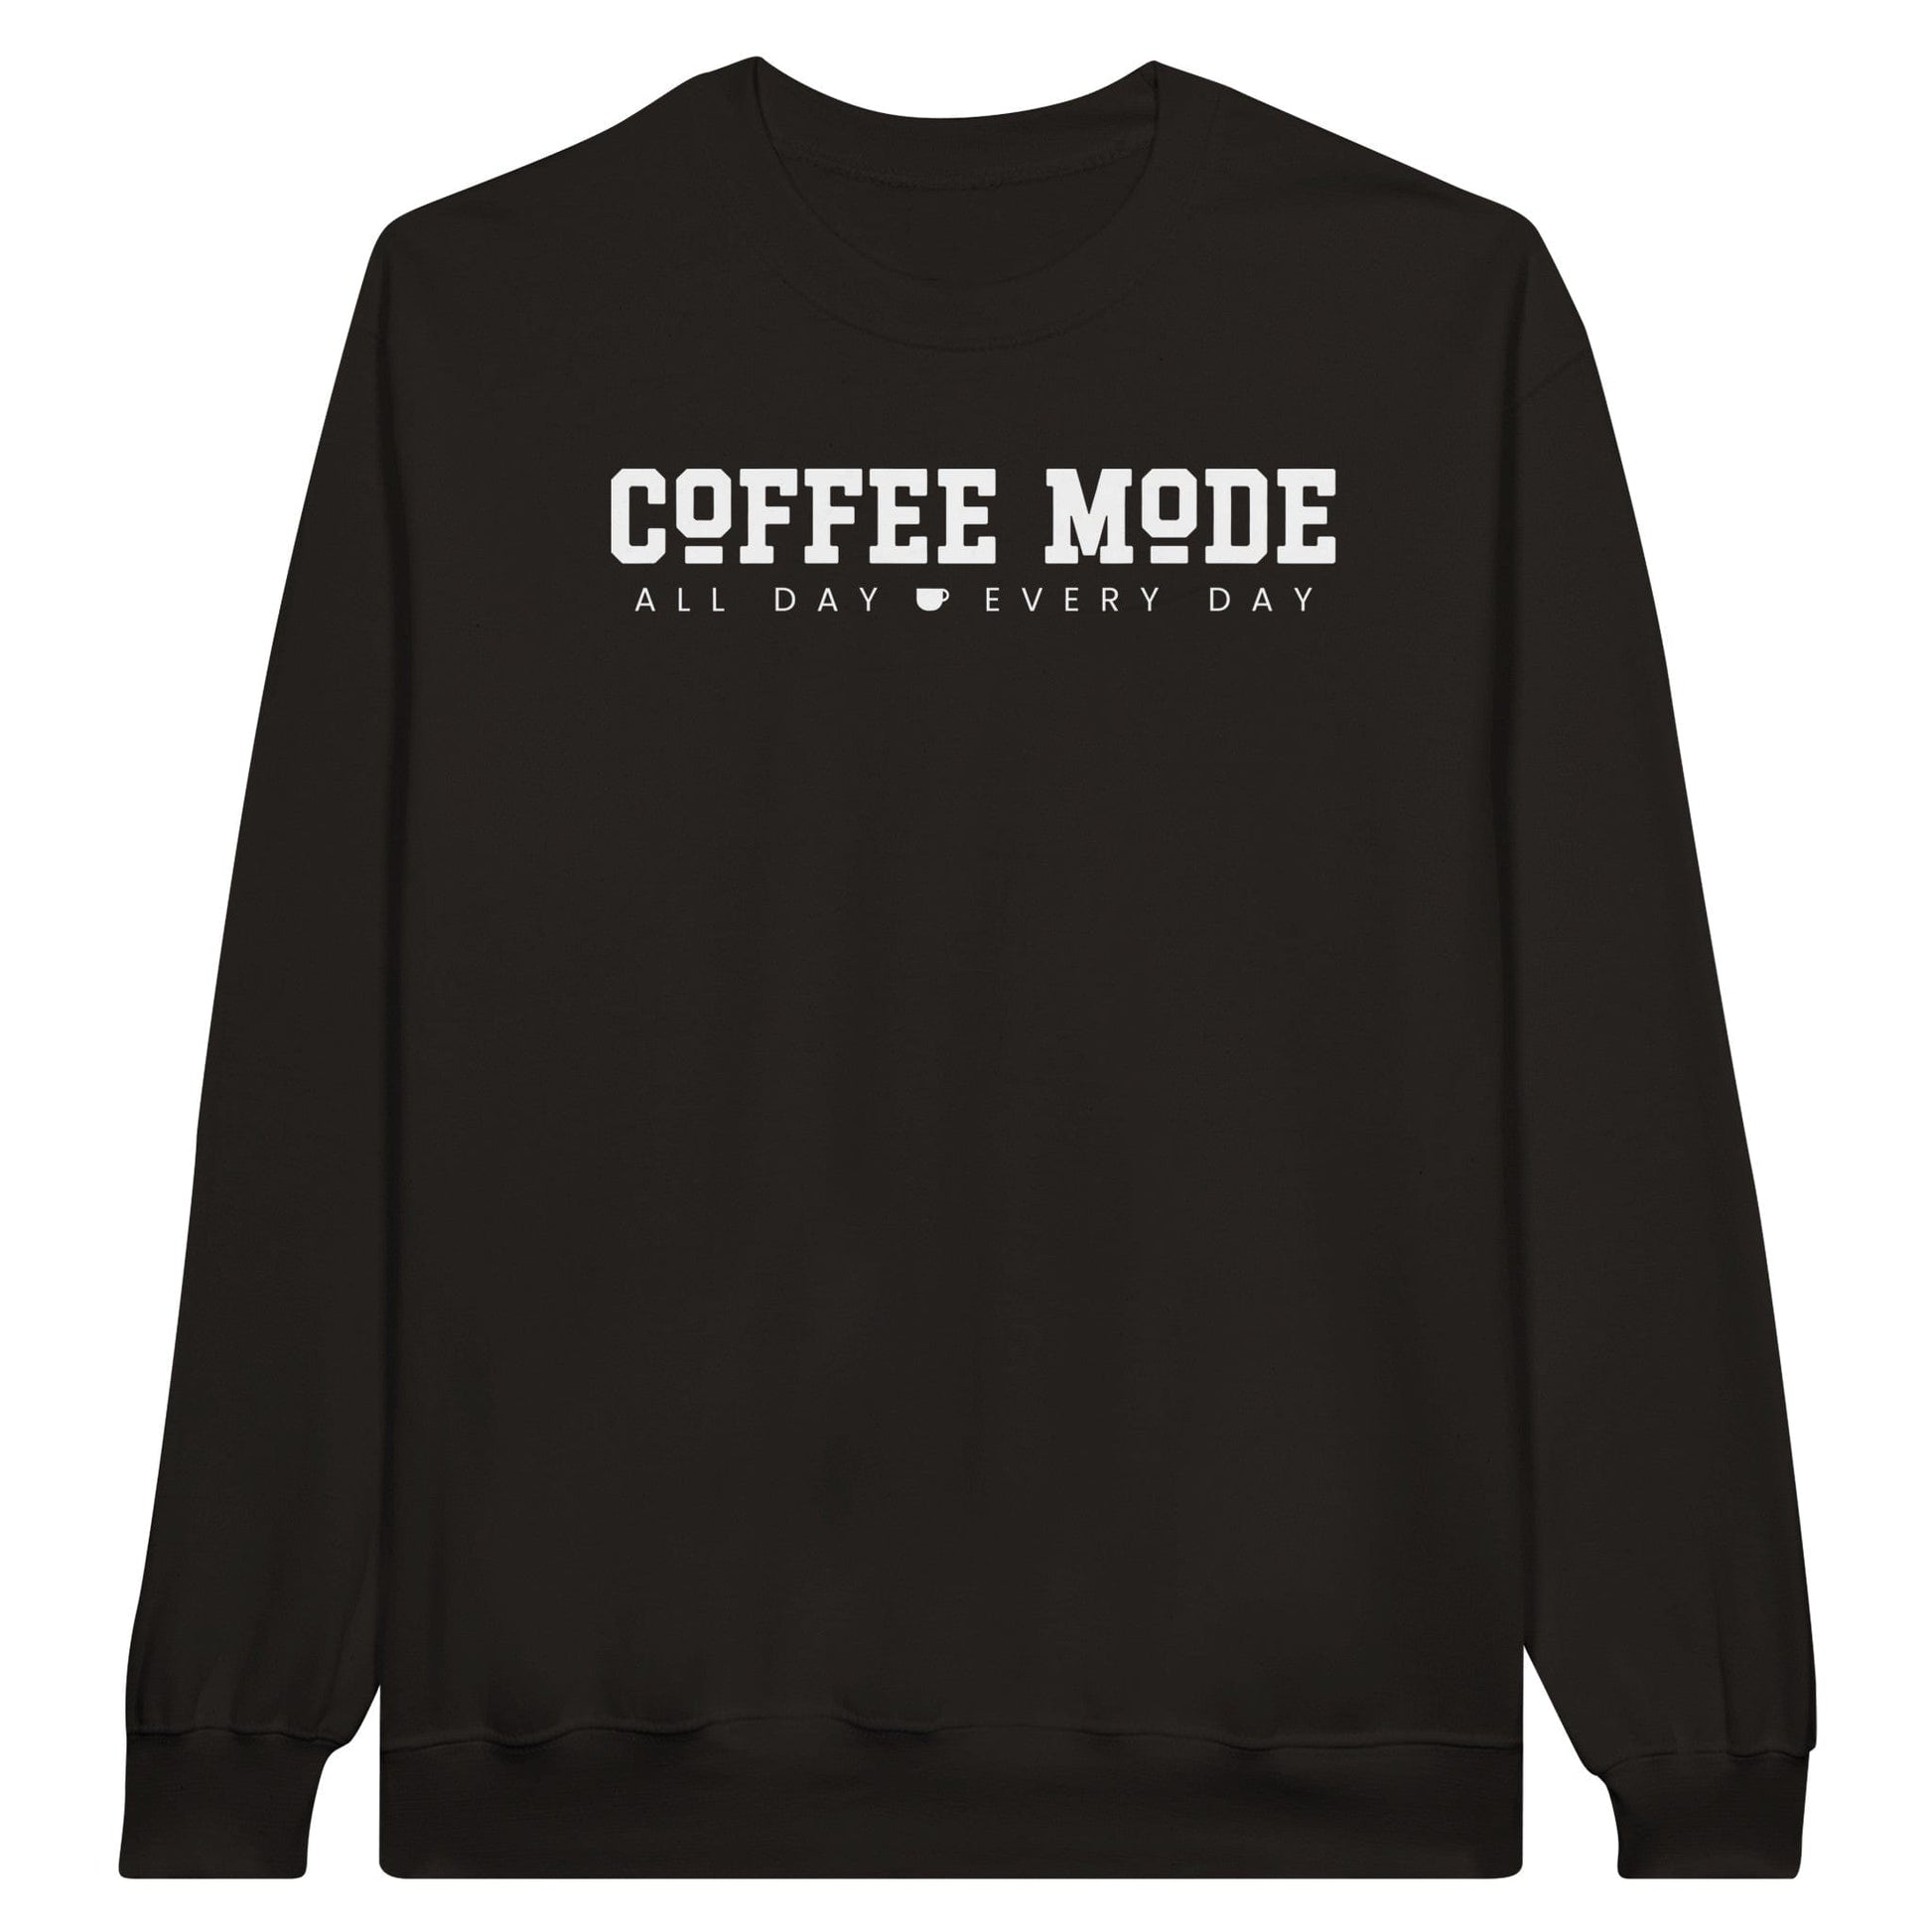 Good Bean Gifts "Coffee Mode" -Unisex Crewneck Sweatshirt Black / M